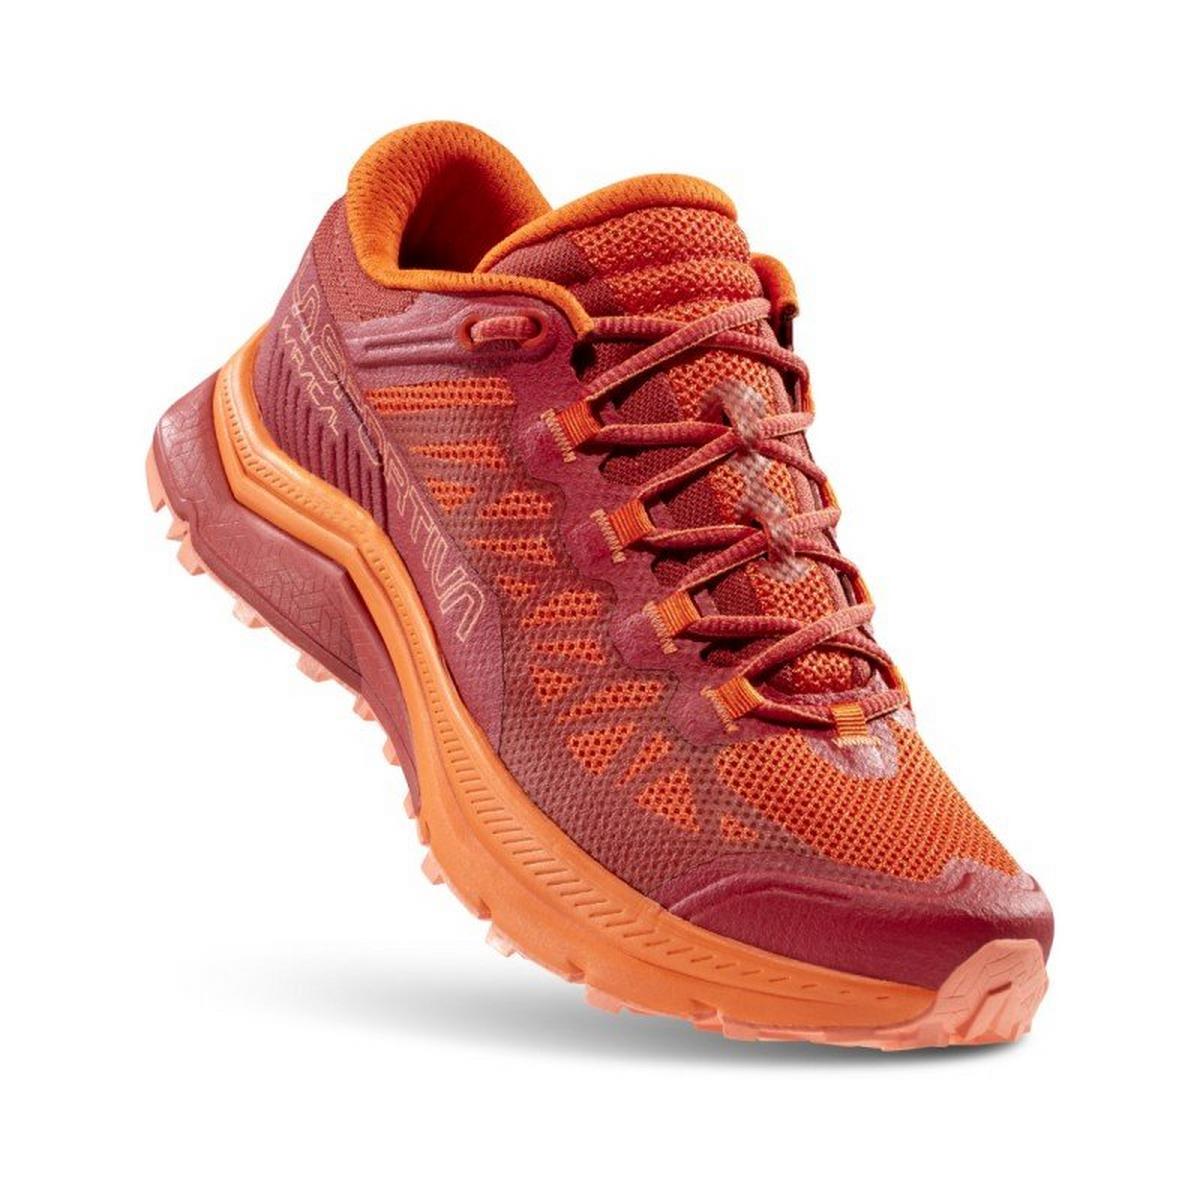 La Sportiva Women's Karacal Trail Running Shoes - Red